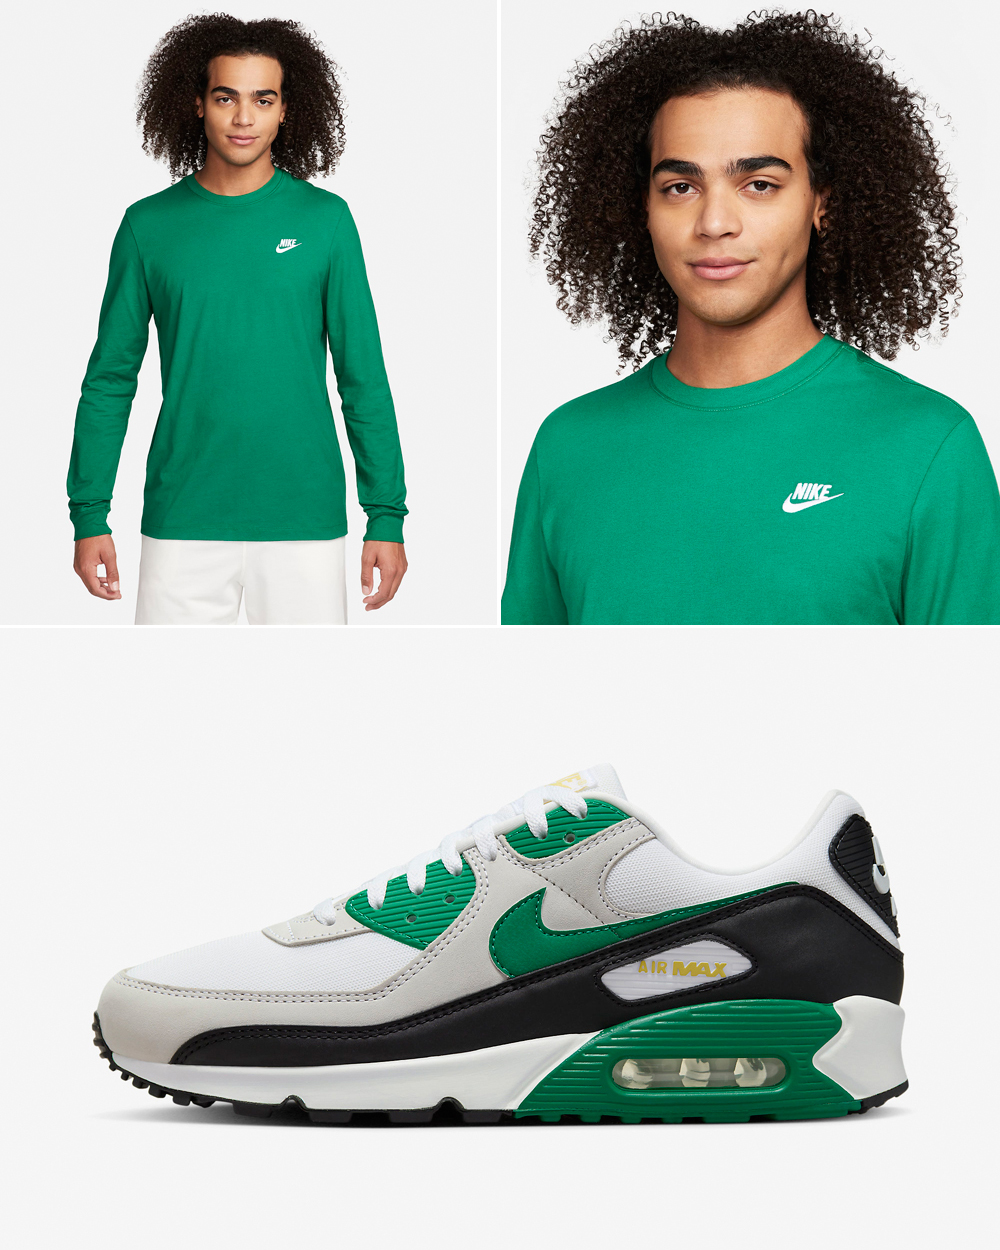 Nike-Air-Max-90-Malachite-Long-Sleeve-Shirt-Match-Outfit